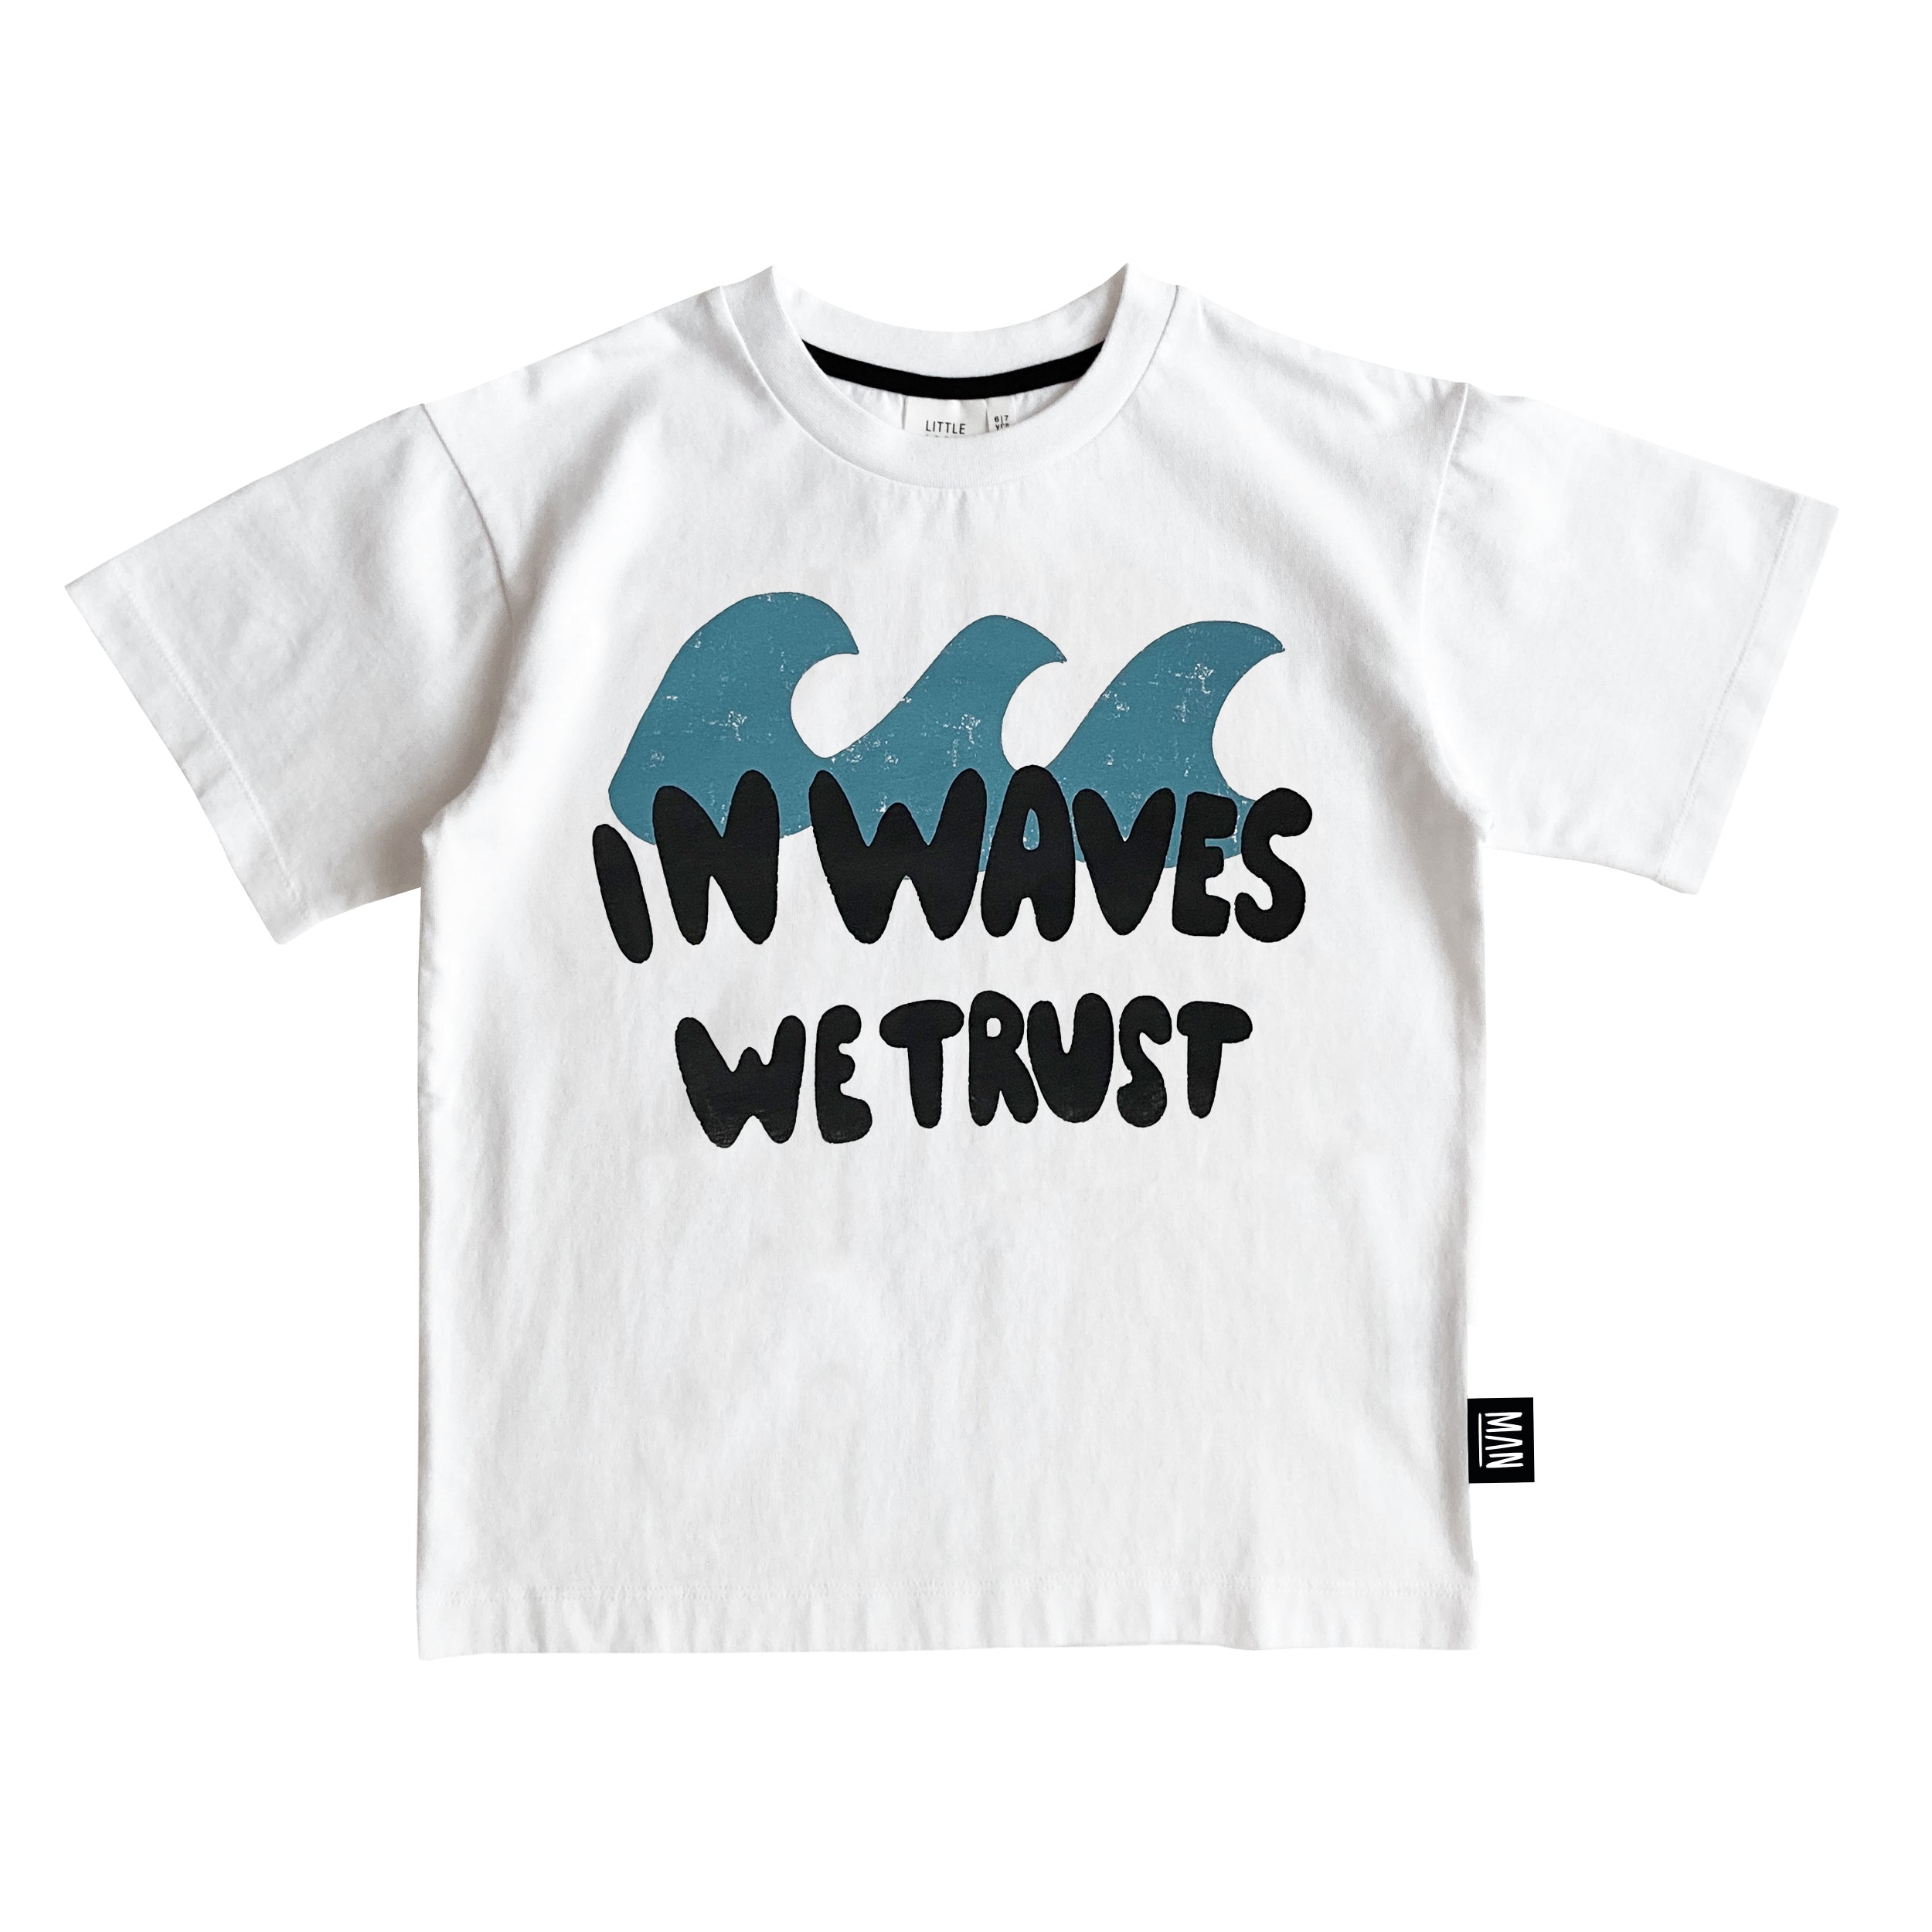 WAVES Skate T-Shirt White